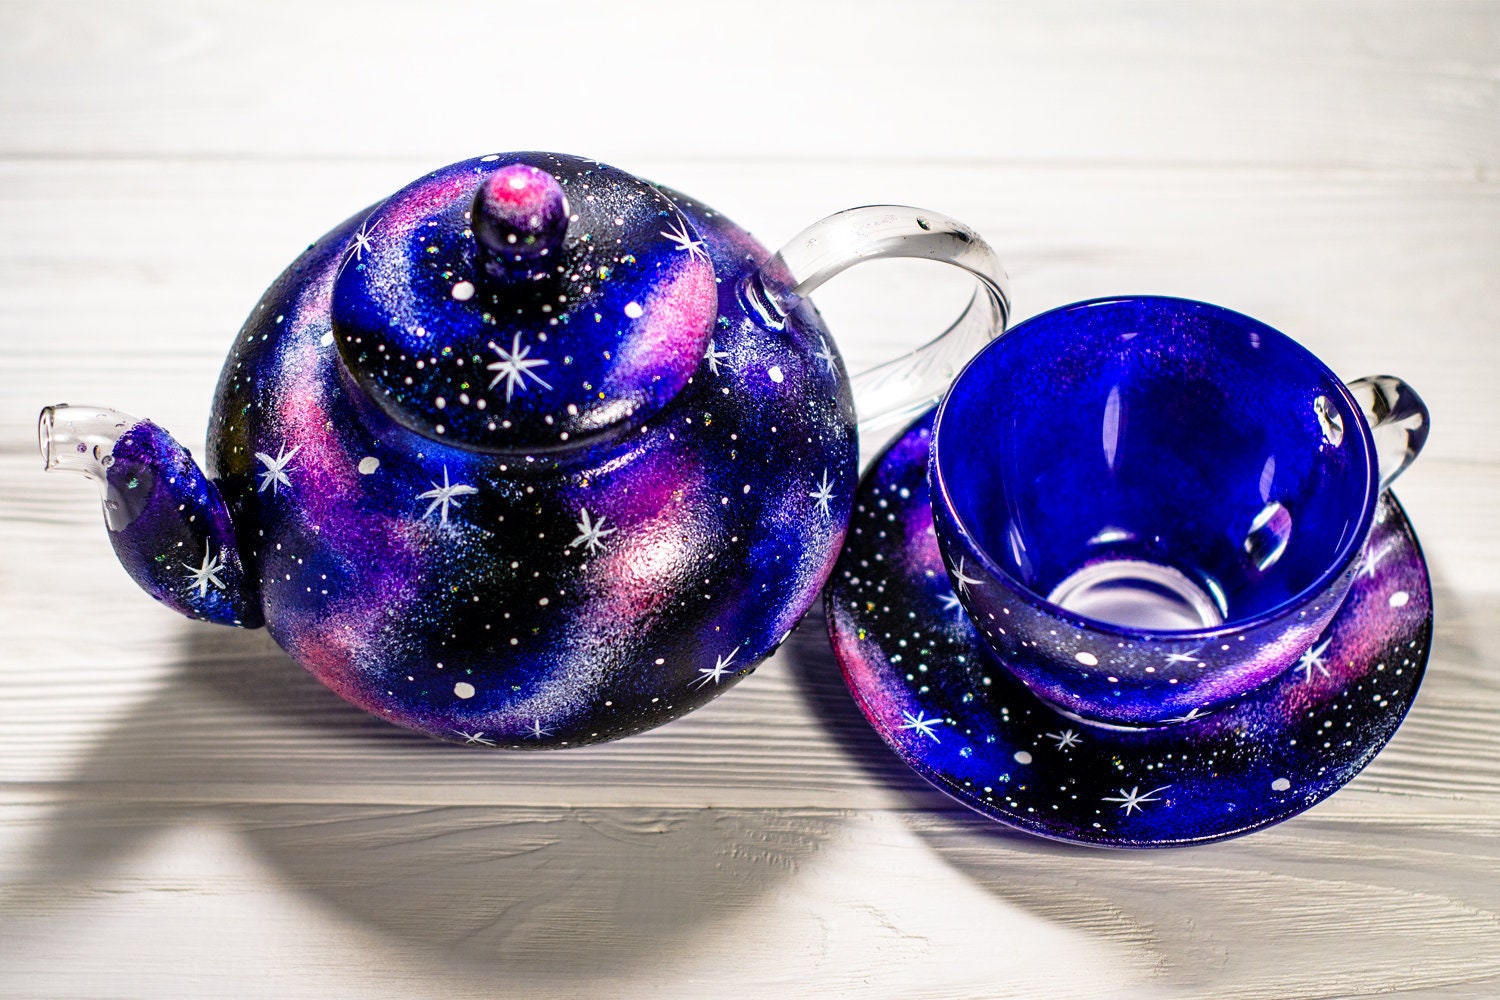 Glass Teapot With Infuser Tea Kettle Floral Tea Pot Daisies Teapot for  Women Hostess Gift -  Canada